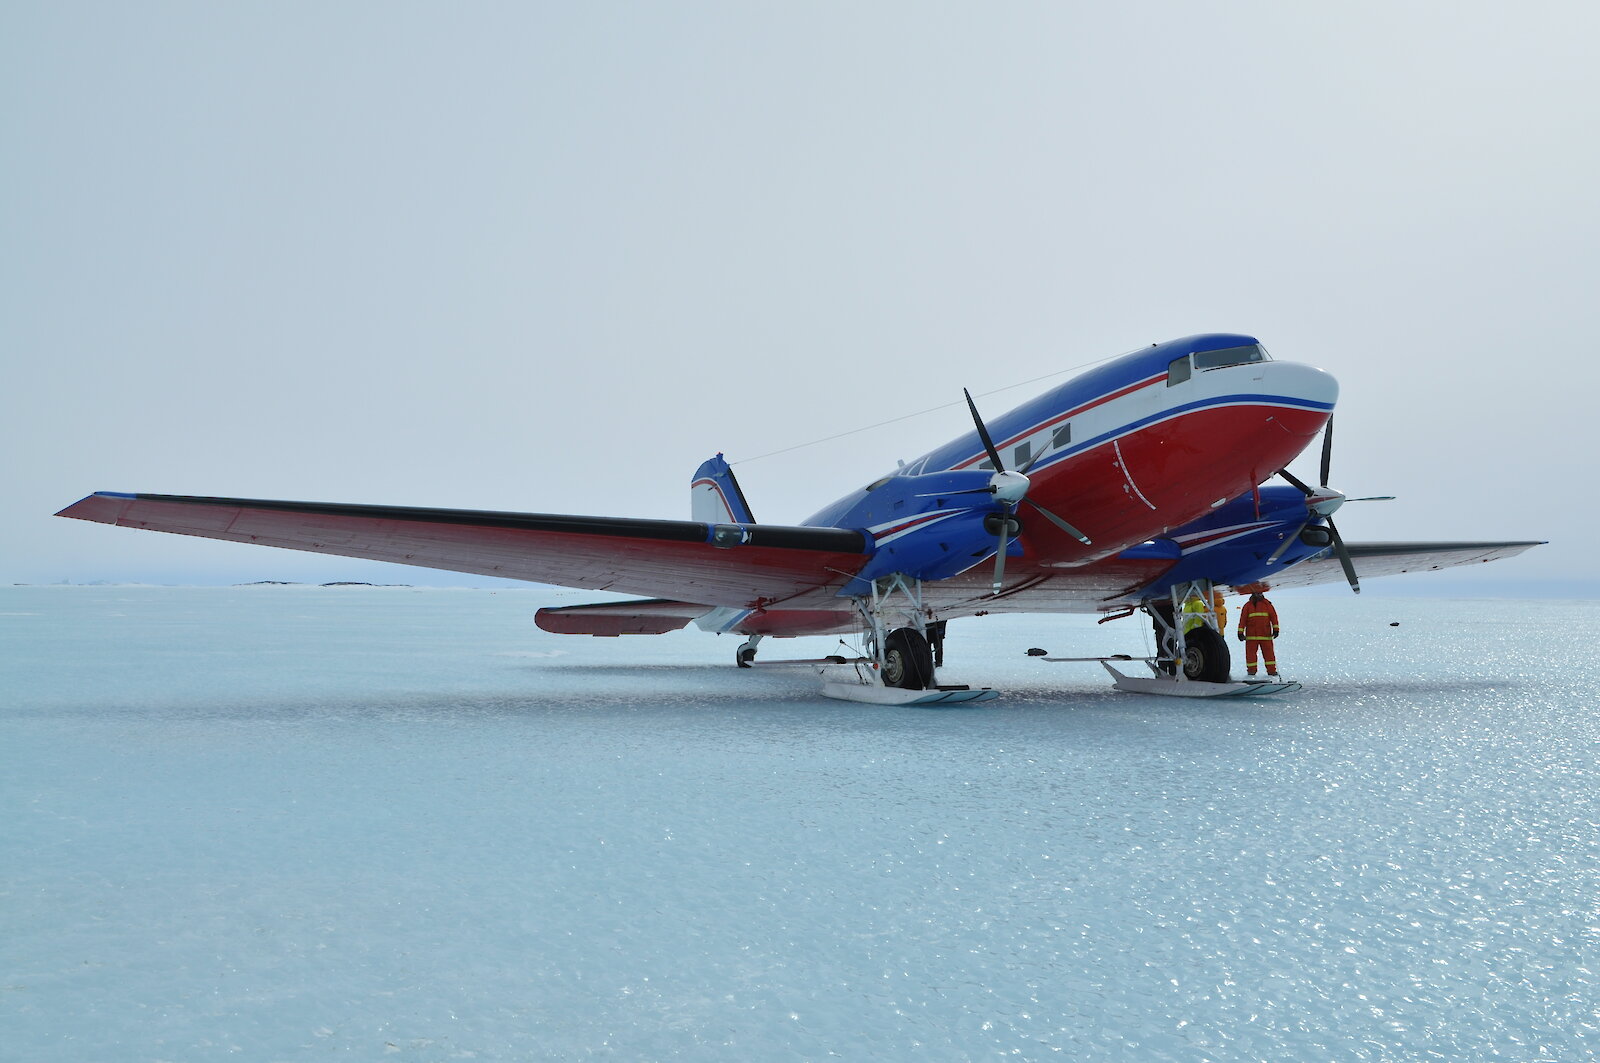 Basler BT-67 aircraft – Australian Antarctic Program